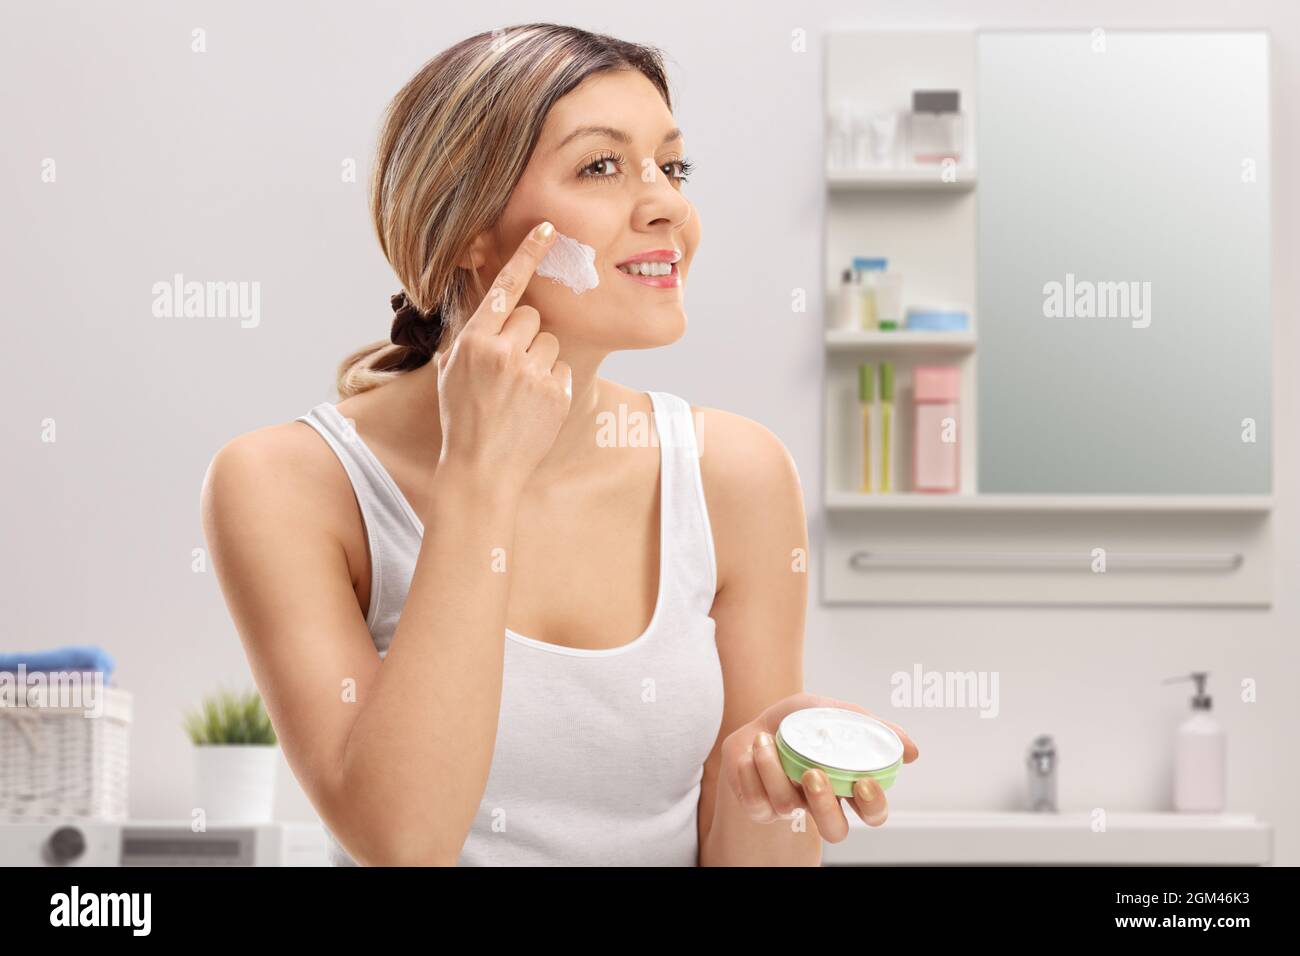 Young woman applying face cream inside a bathroom Stock Photo